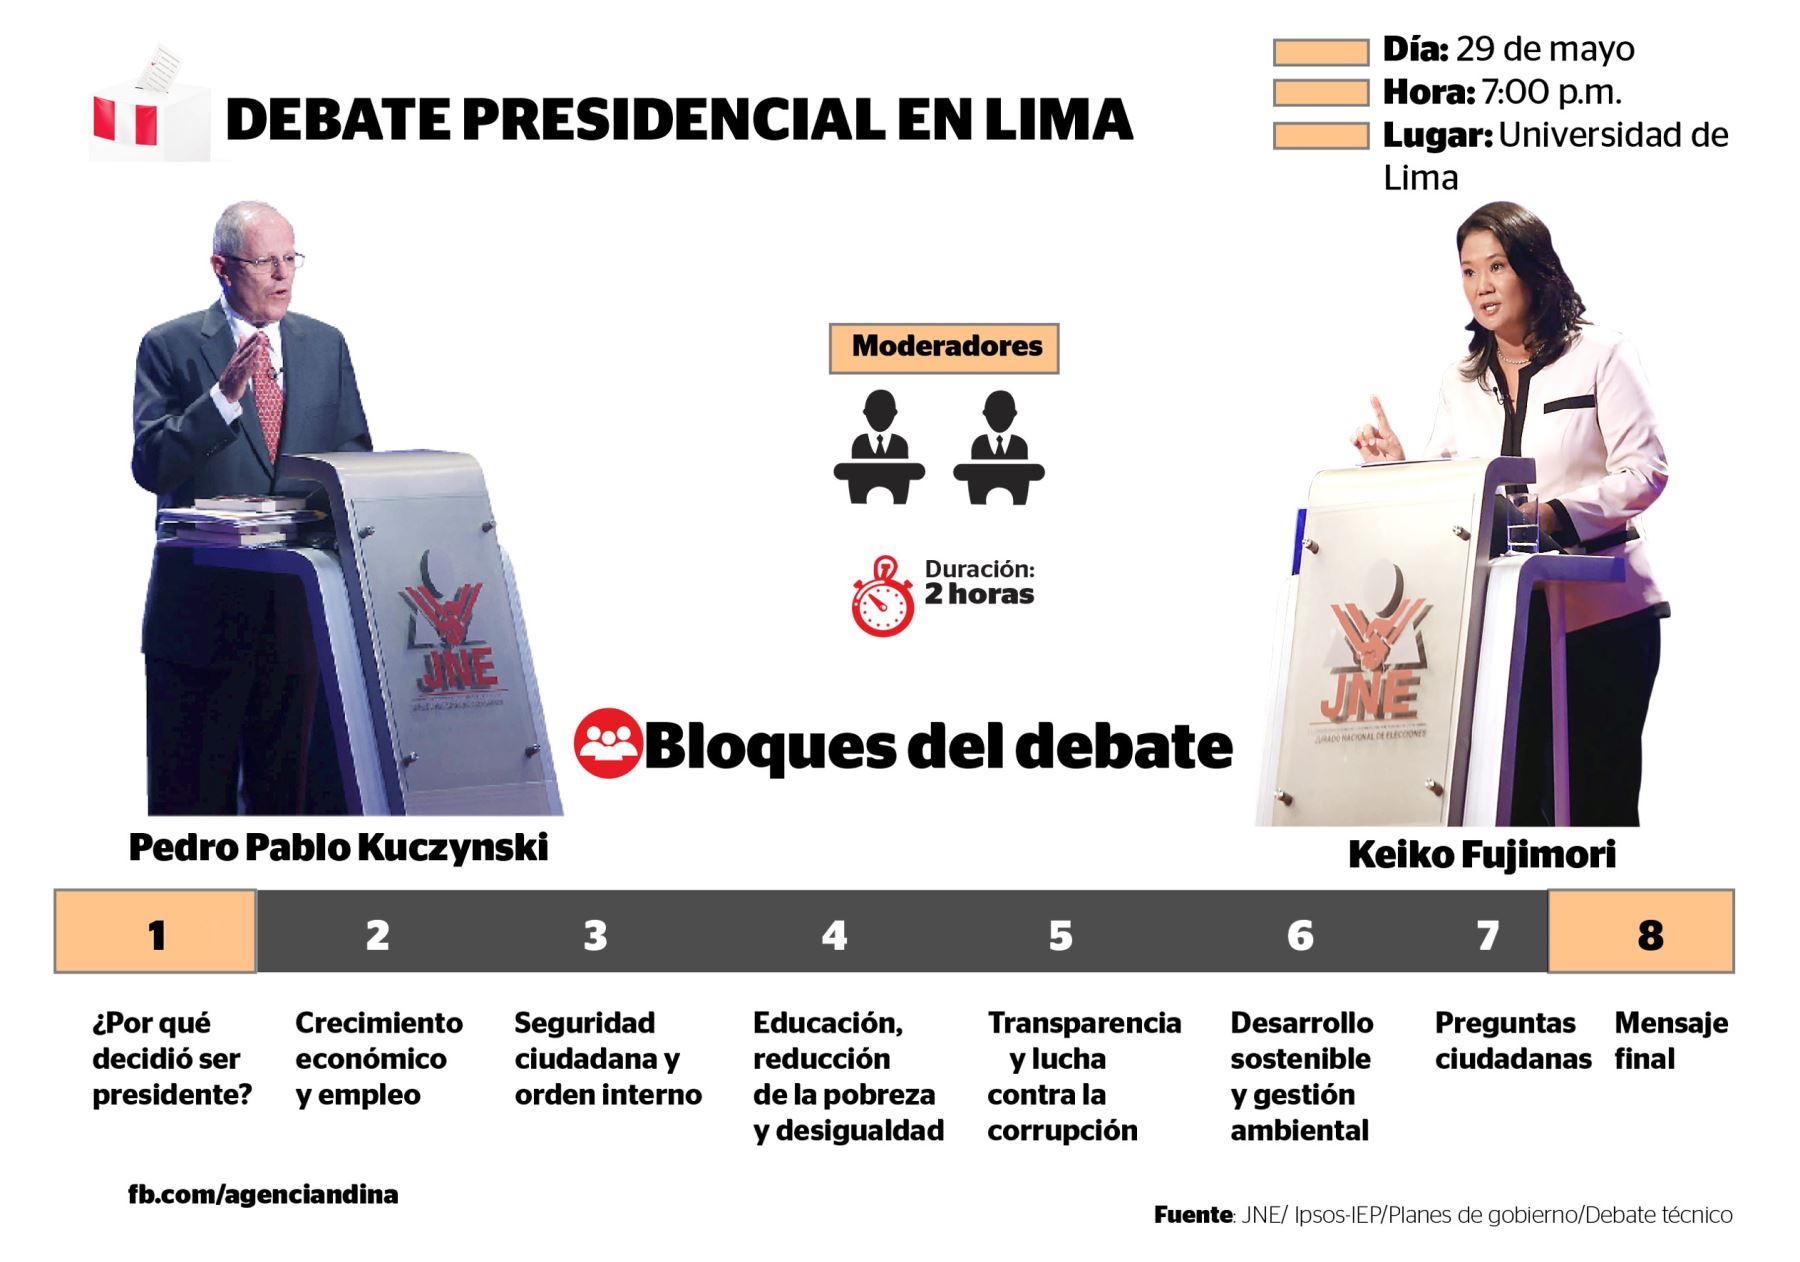 Segundo debate presidencial entre los candidatos Pedro Pablo Kuczynski y Keiko Fujimori.